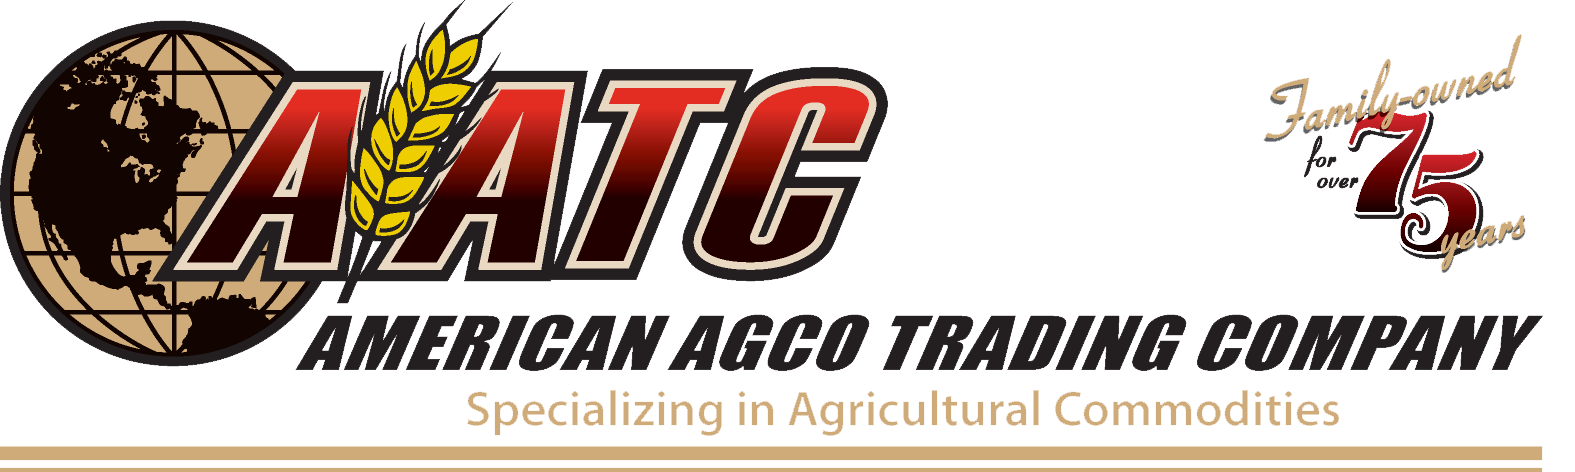 Agco Logo - American AGCO Trading Company State Dairy Association